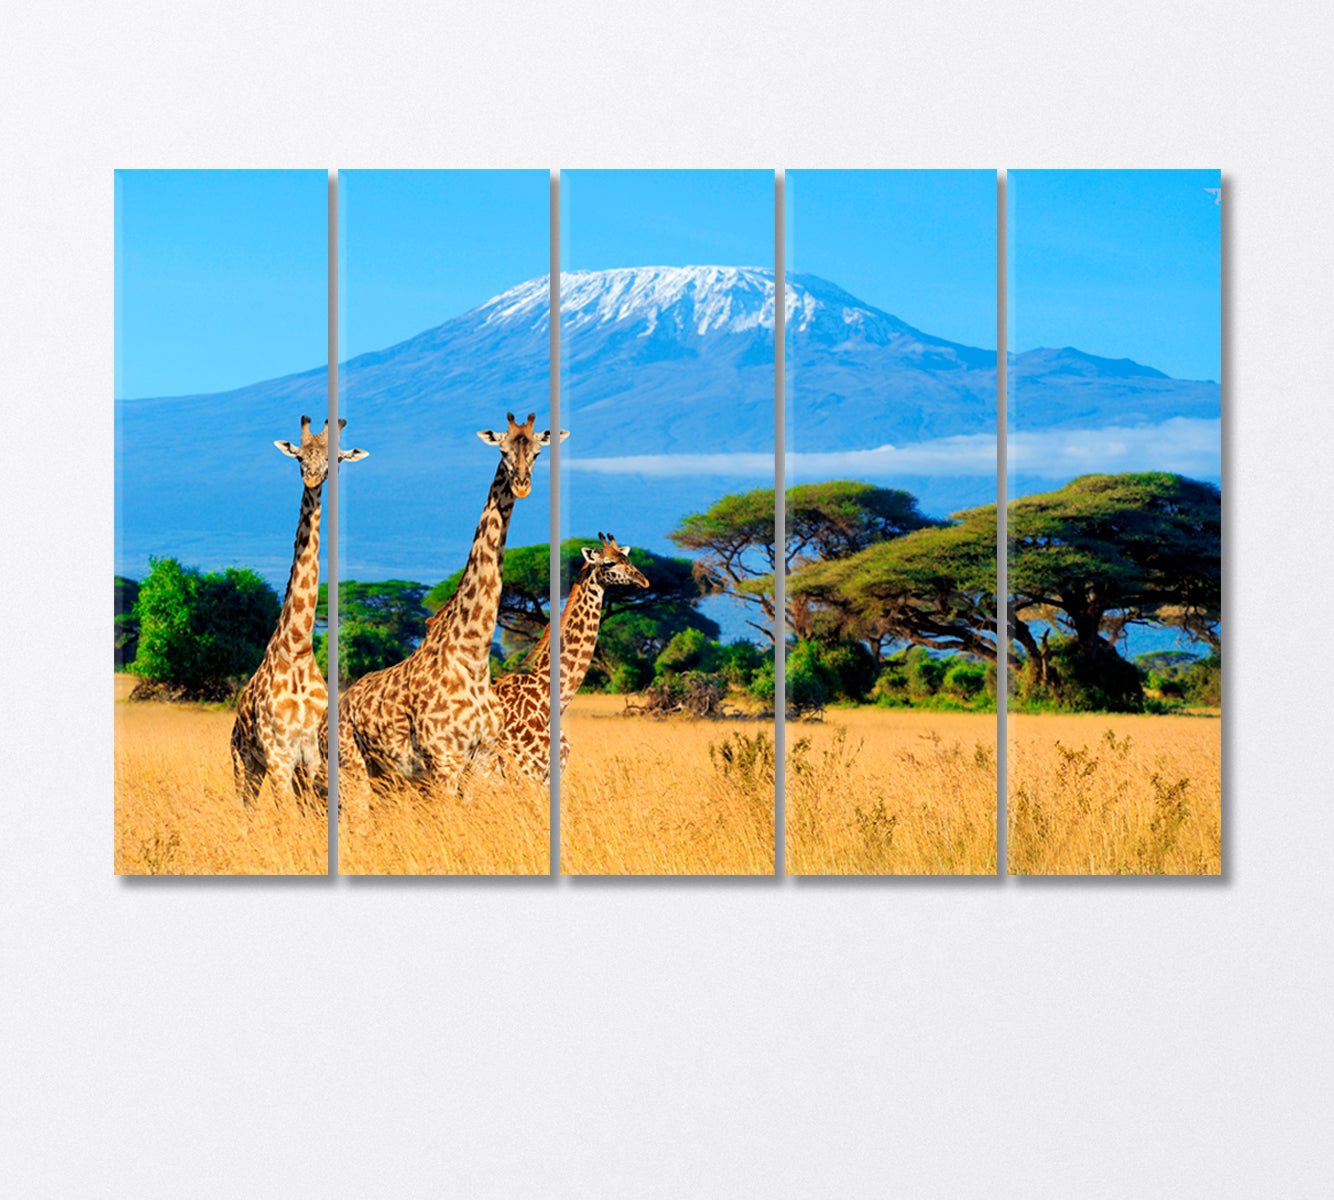 Three Giraffes Near Mount Kilimanjaro Africa Canvas Print-Canvas Print-CetArt-5 Panels-36x24 inches-CetArt